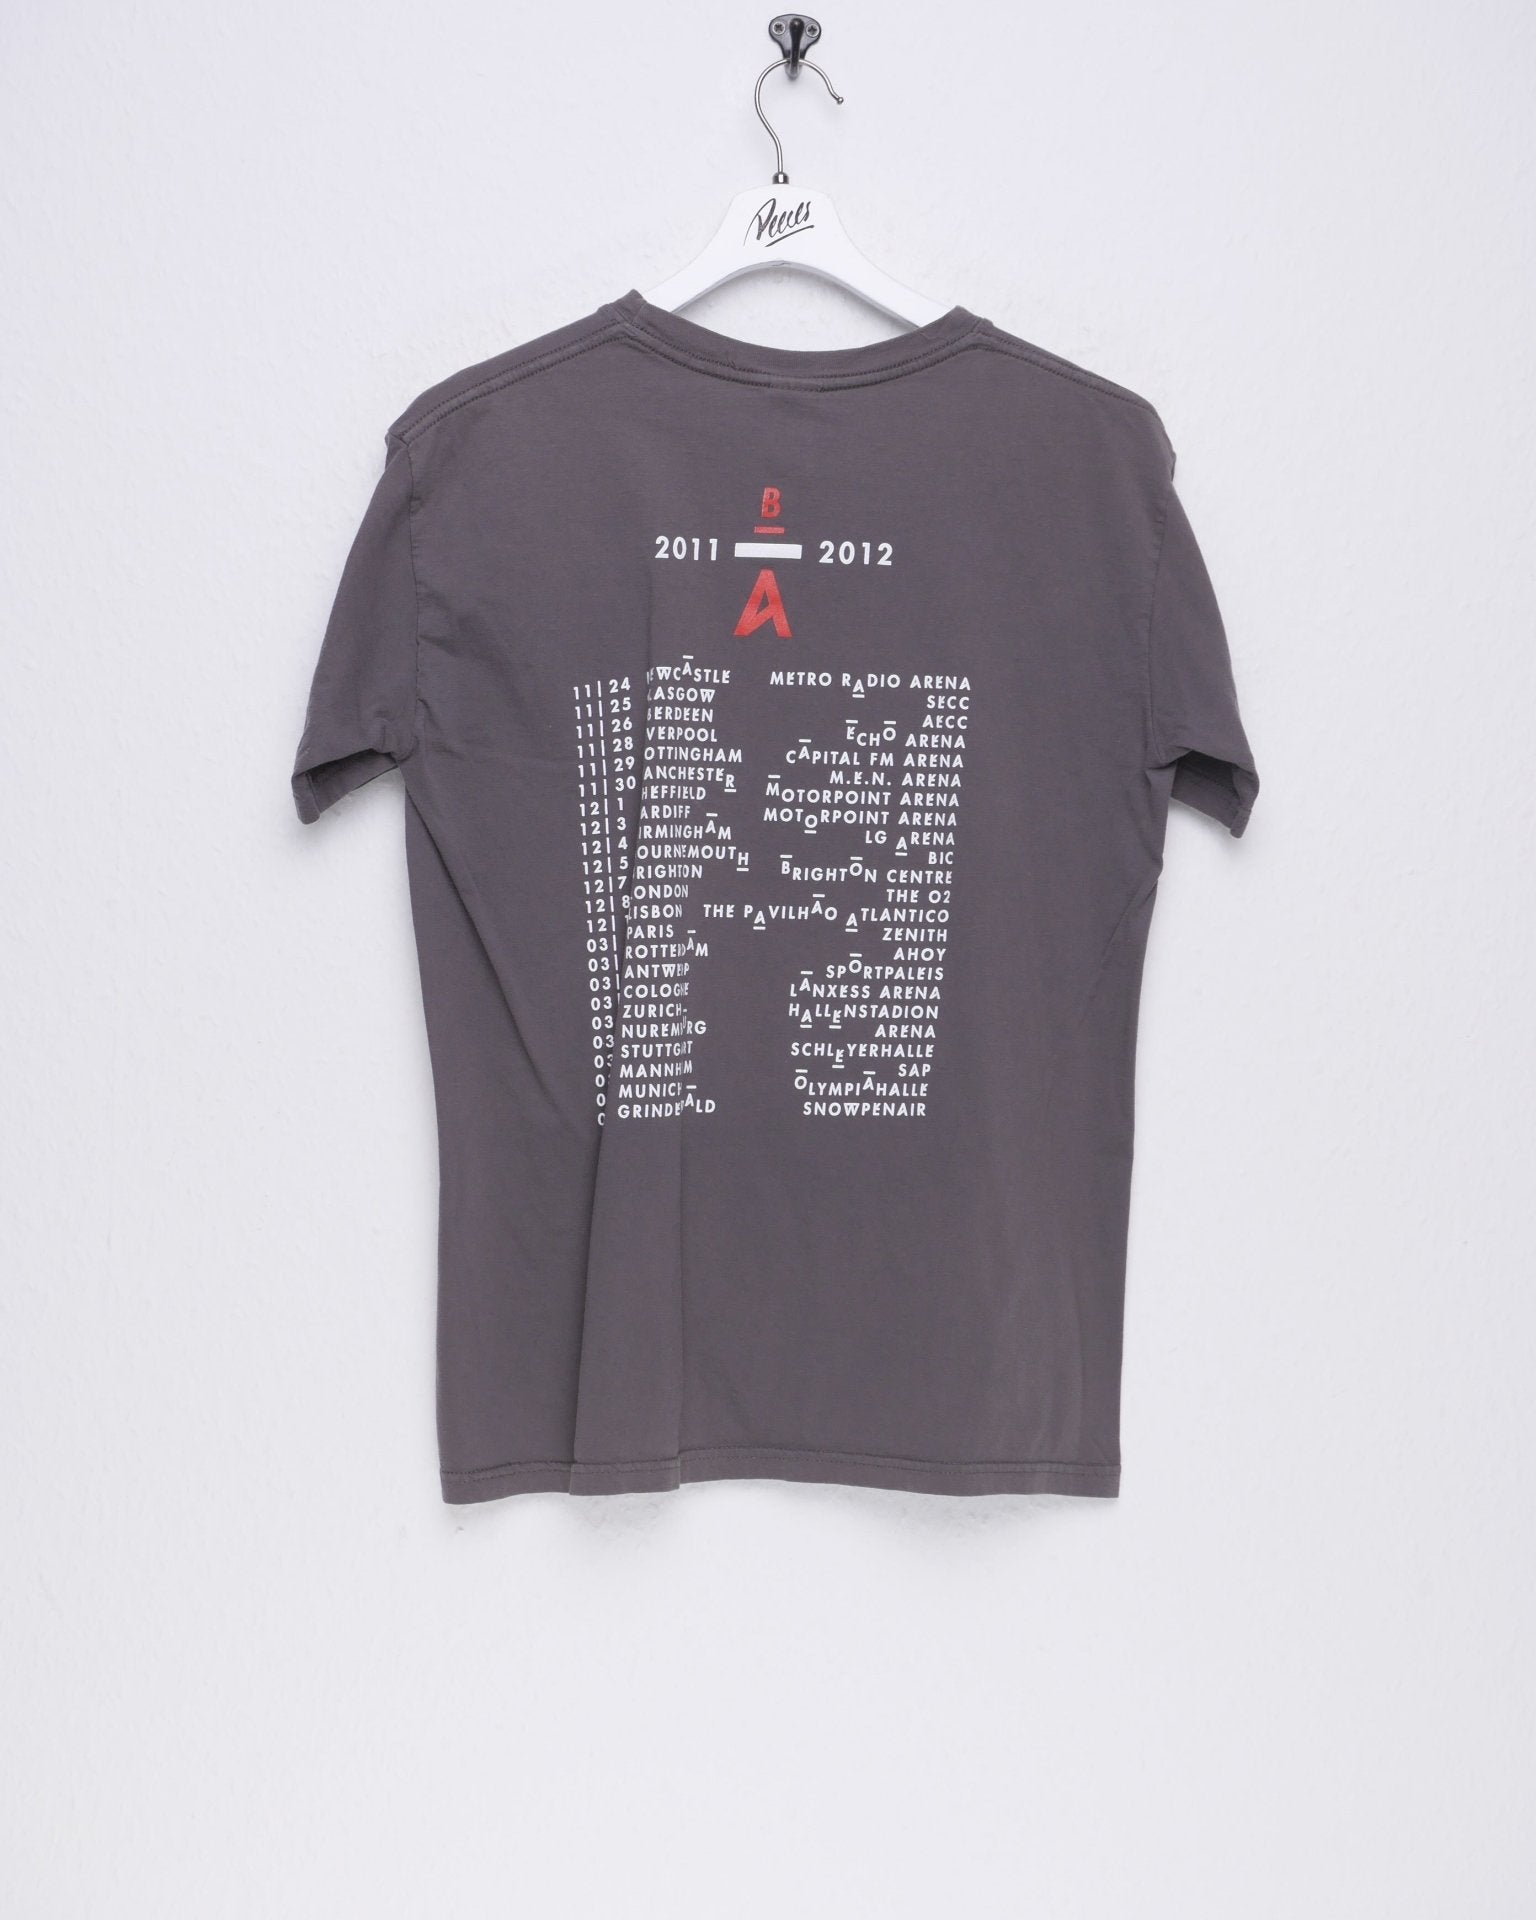 gildan 'Bryan Adams' printed Graphic grey Shirt - Peeces